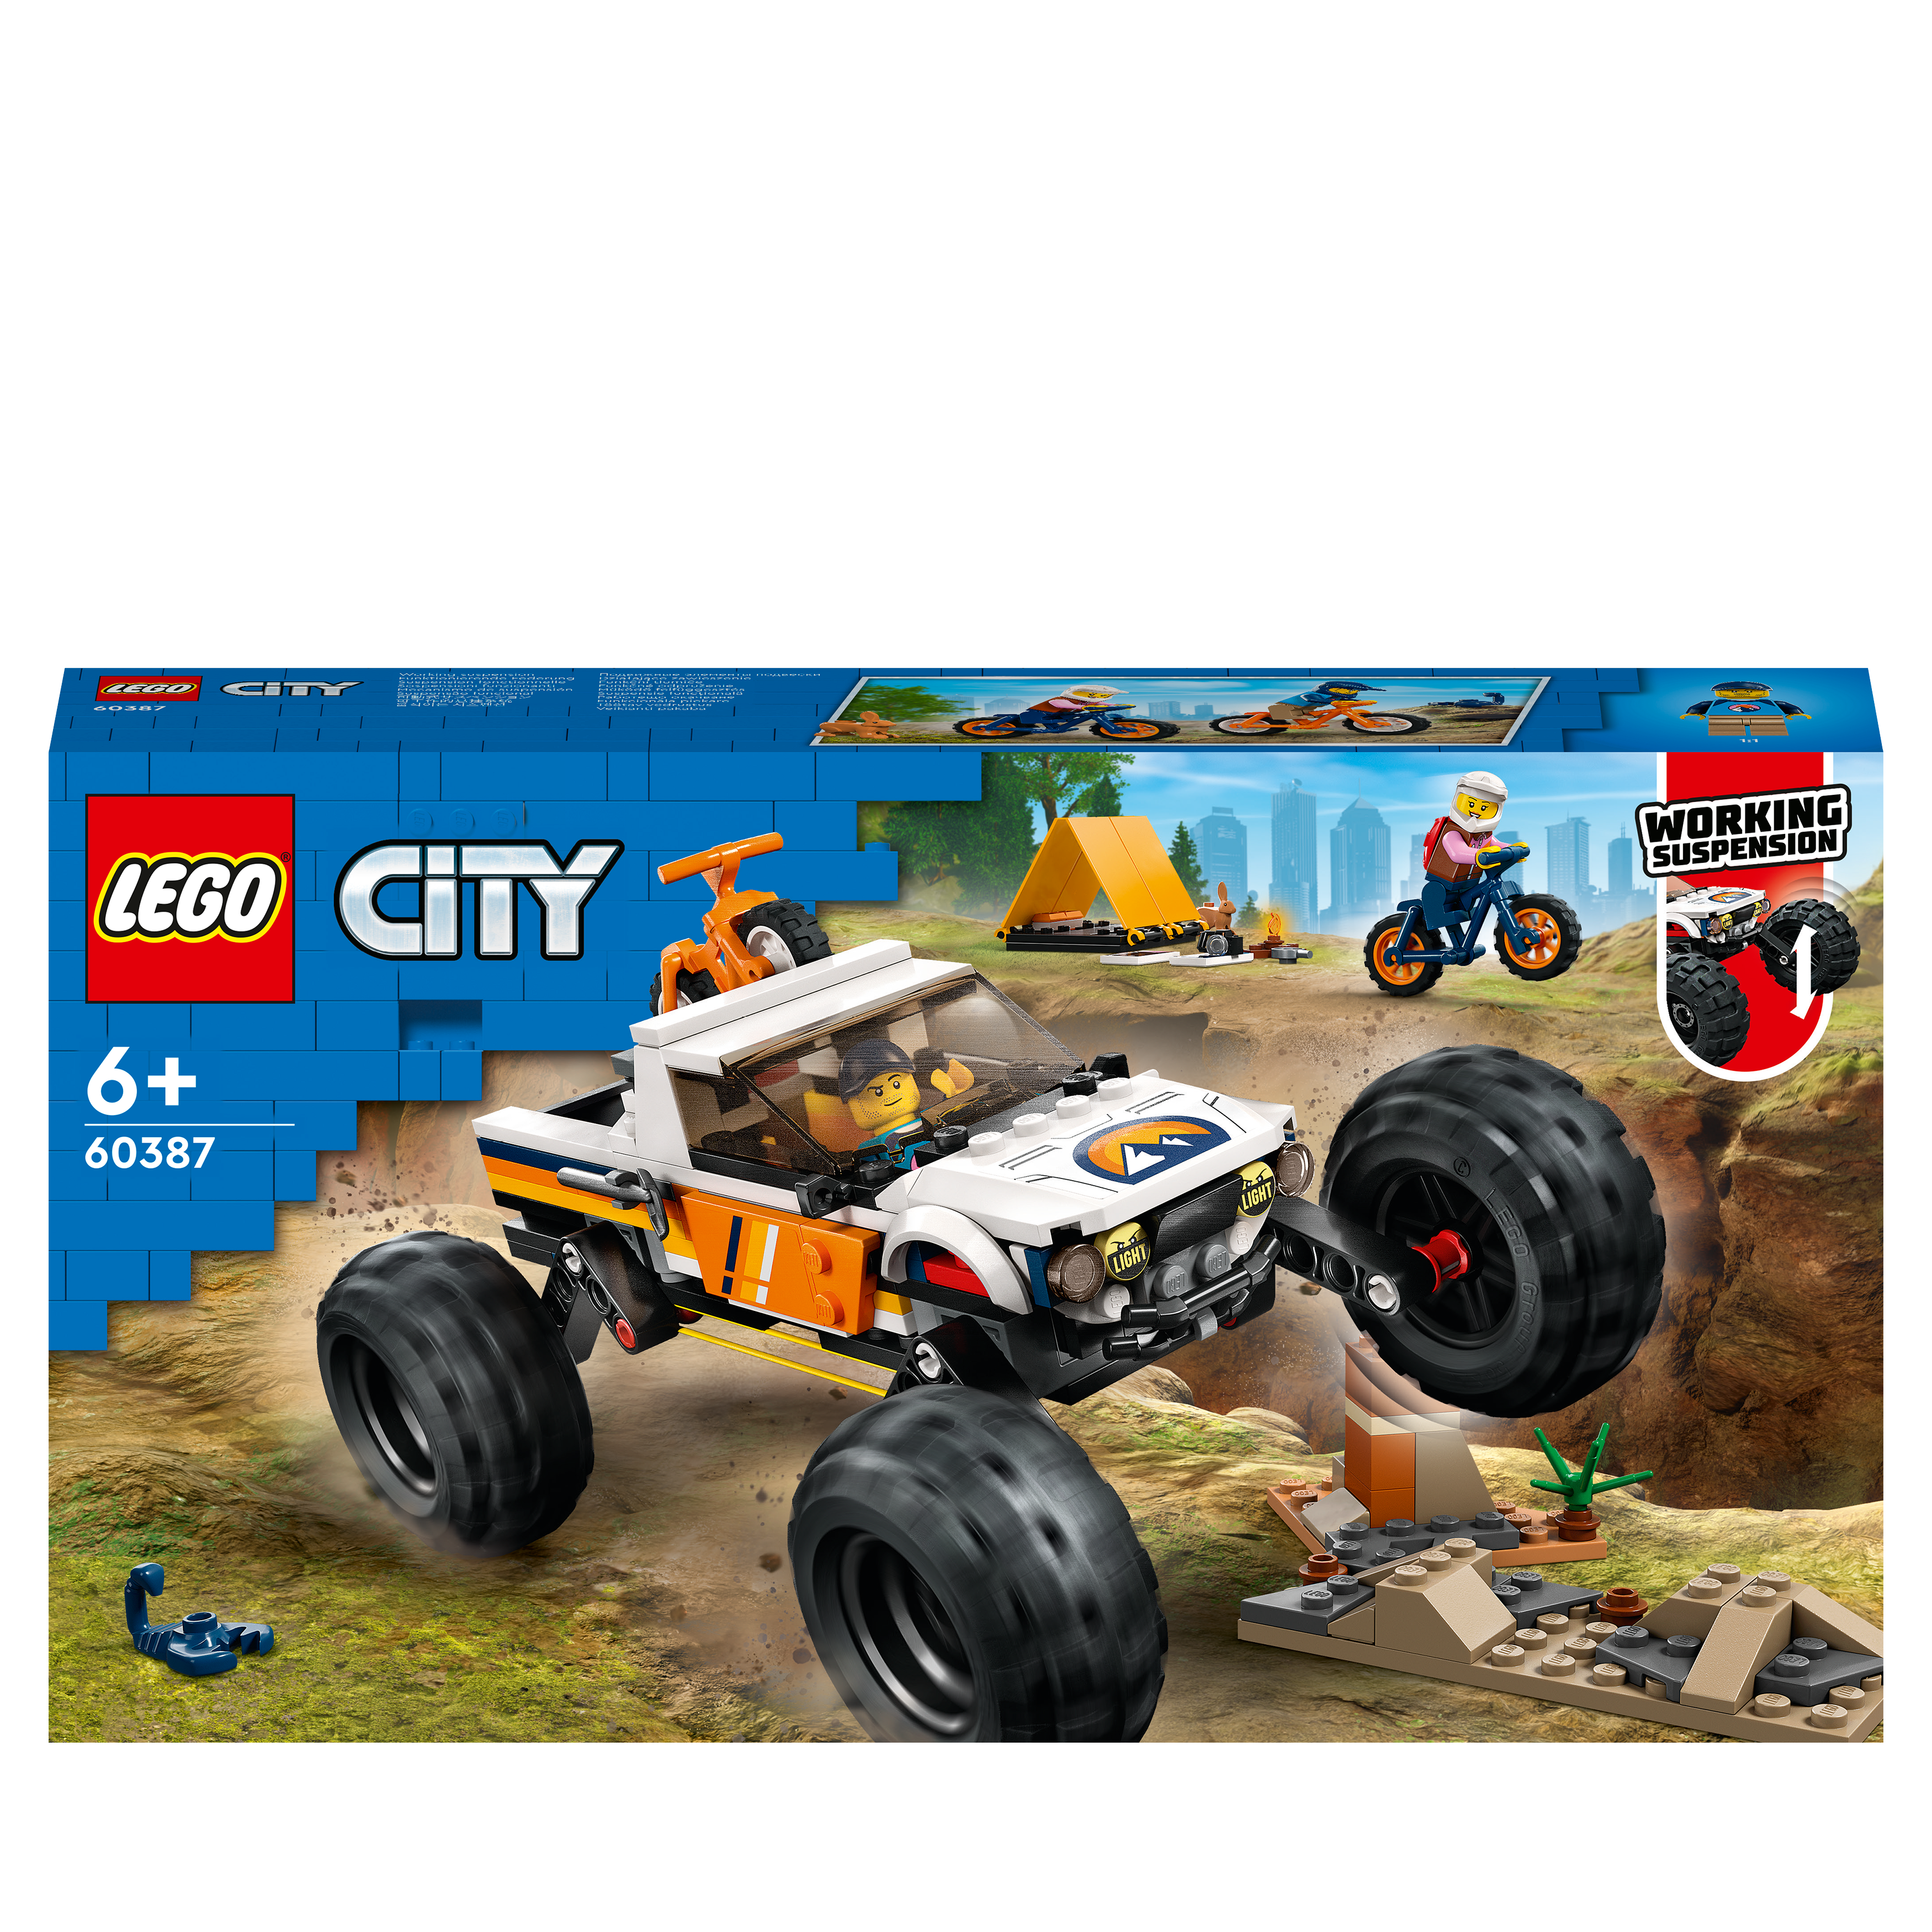 City 60387 Bausatz, Mehrfarbig Abenteuer Offroad LEGO